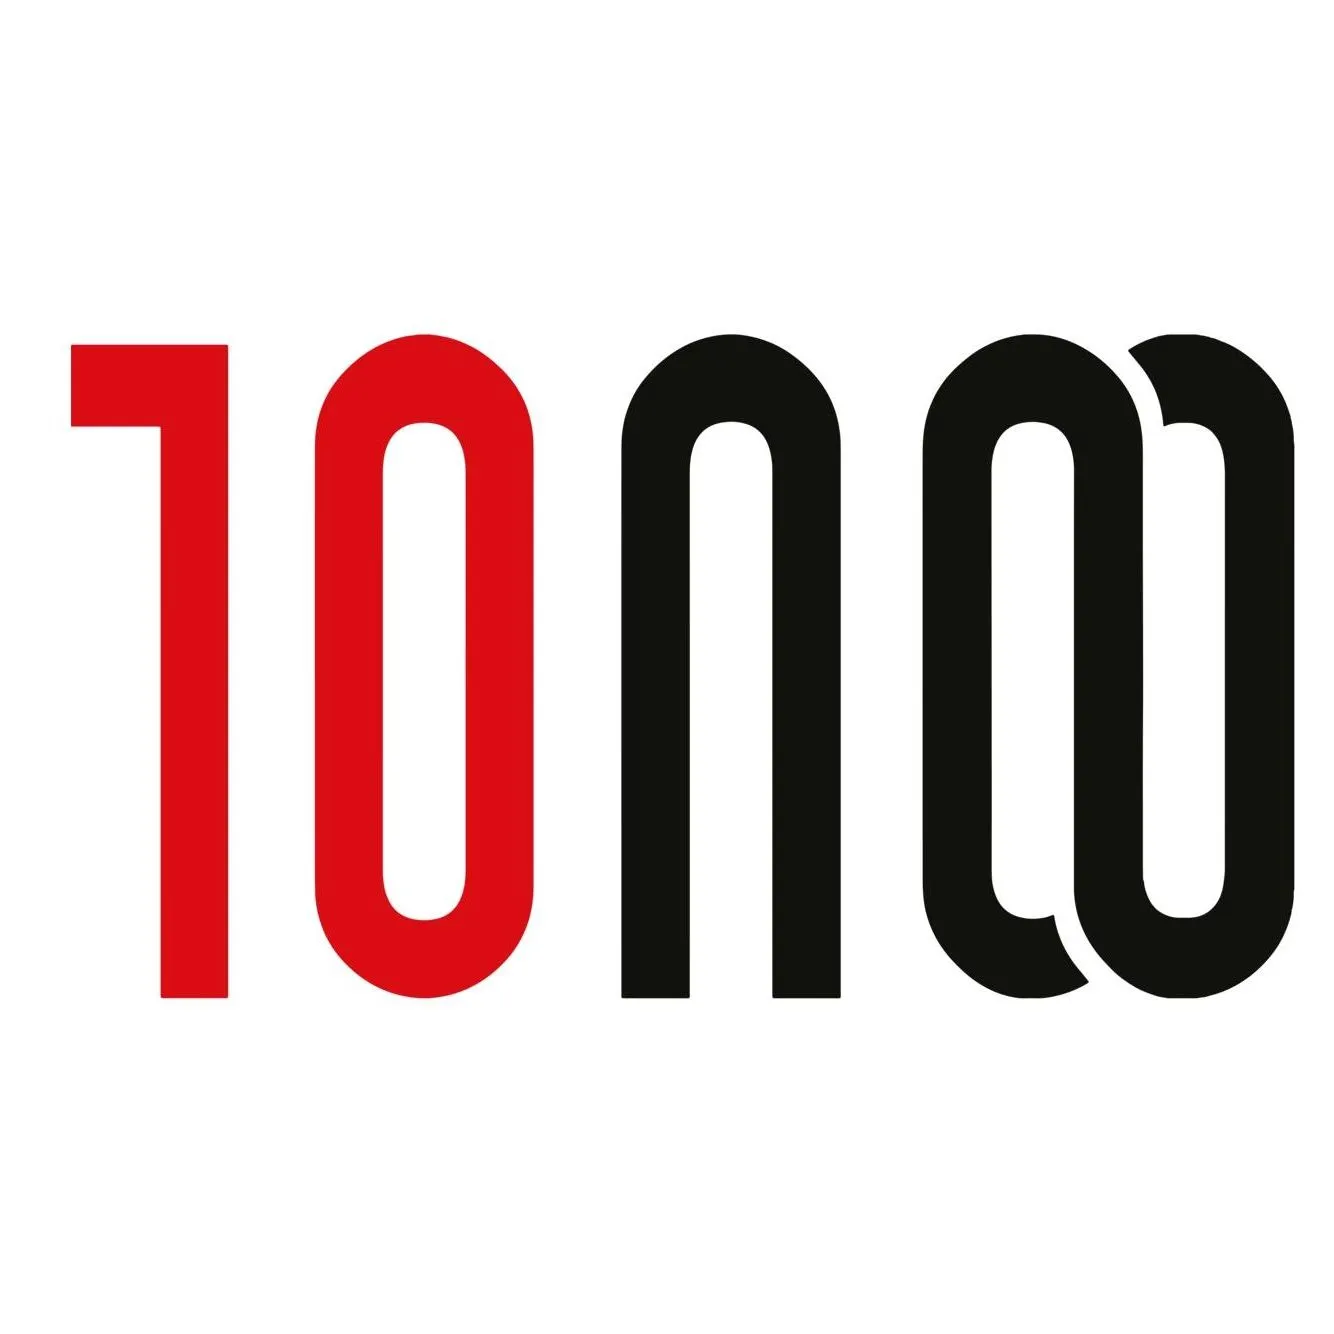  10Noo Promosyon Kodları